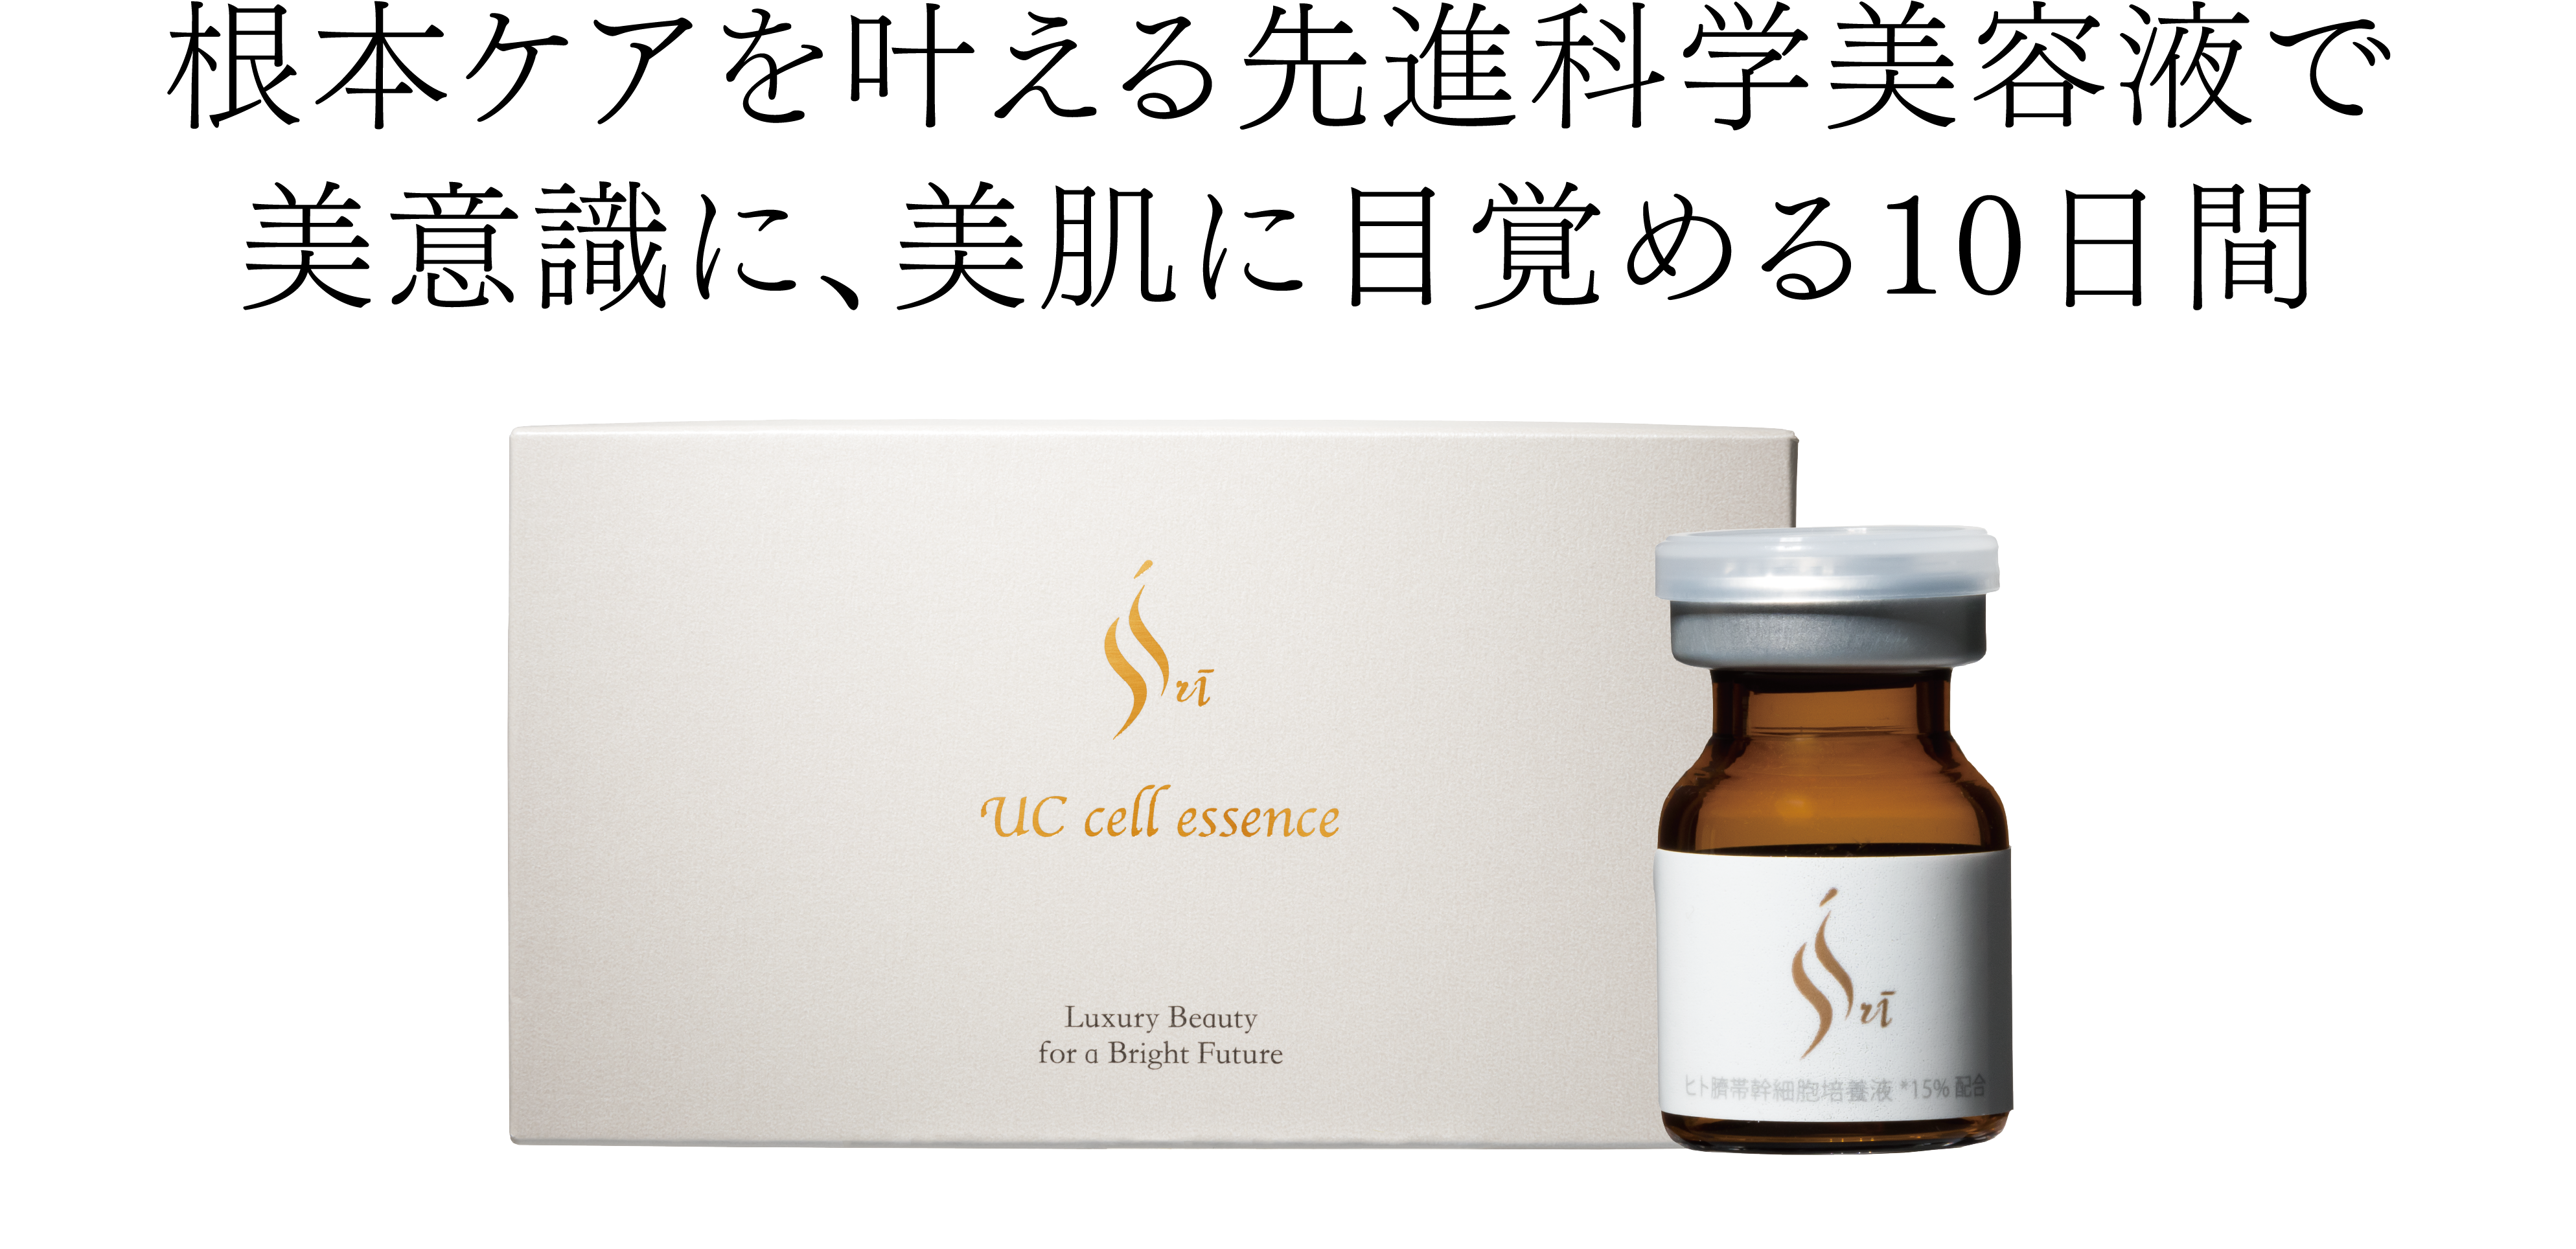 Sri UC cell essence（シュリー・ユーシー・セル・エッセンス）